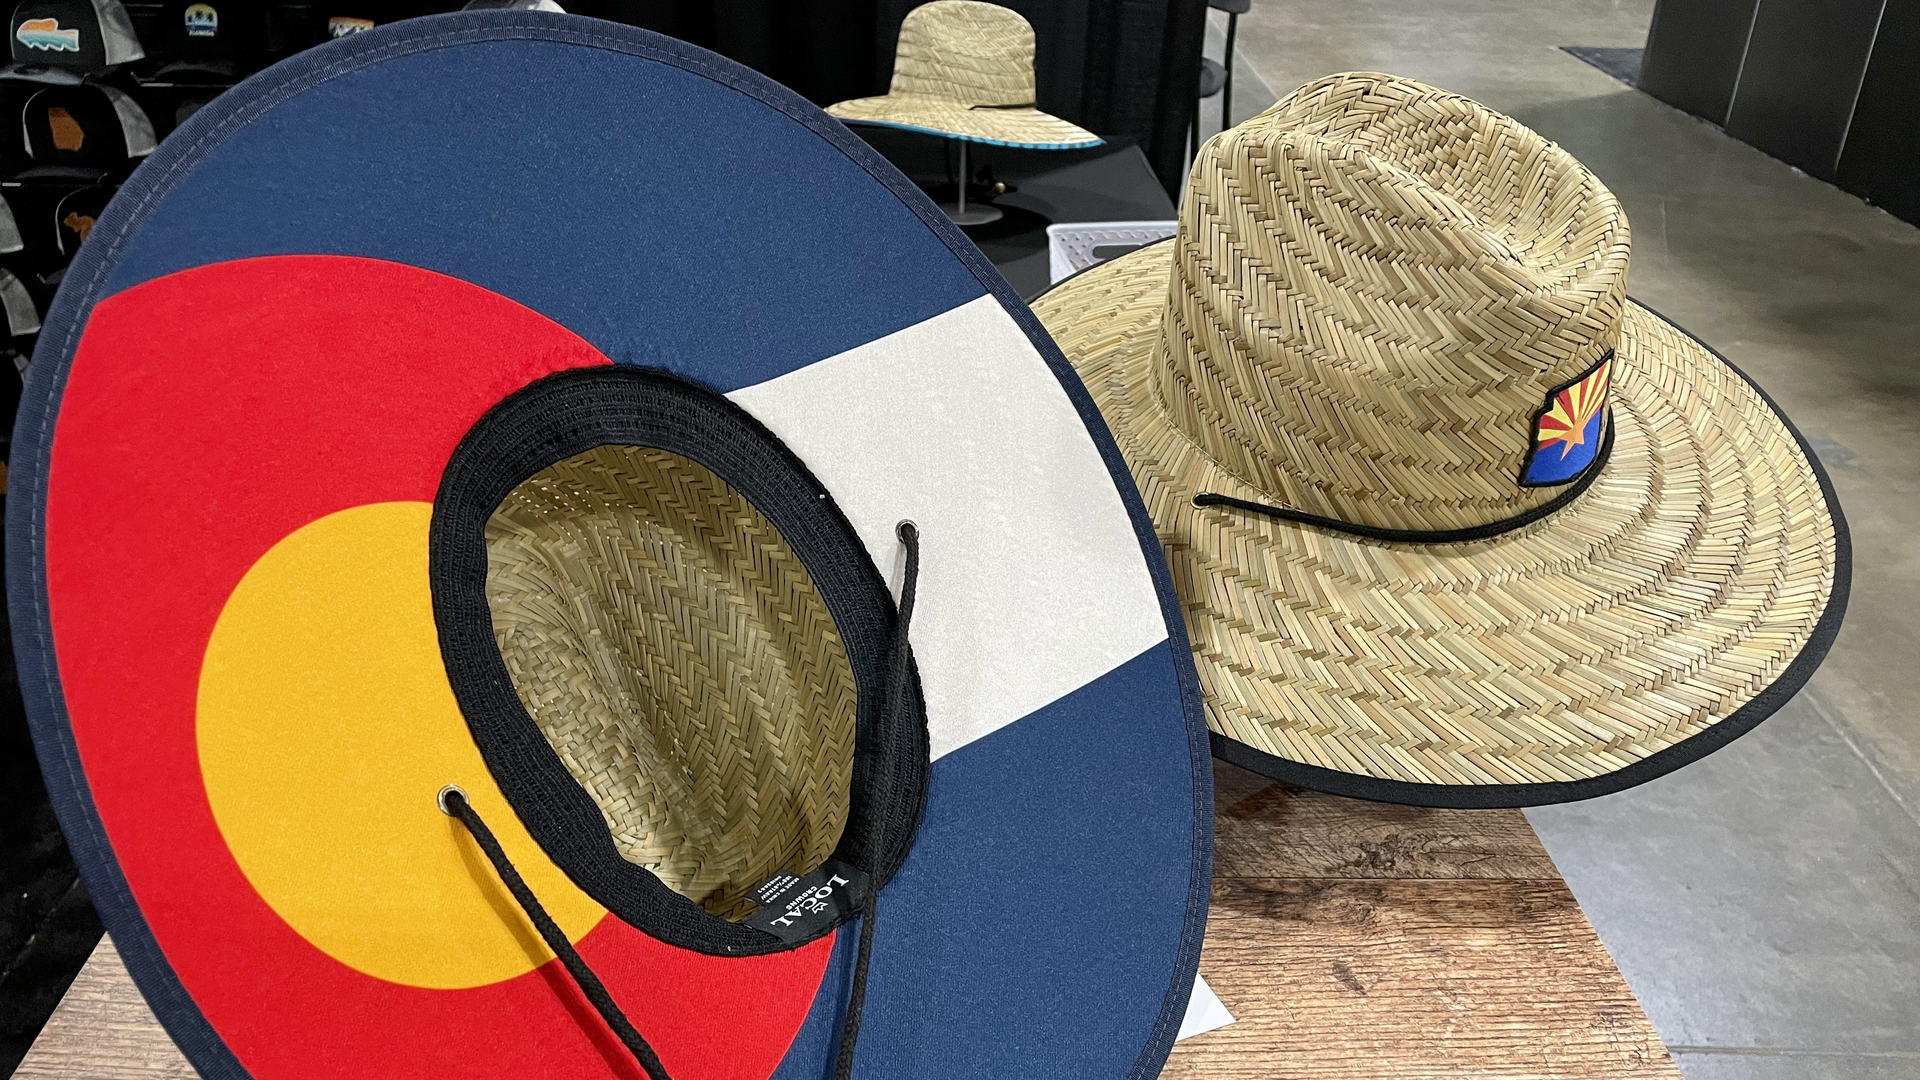 A sun hat with a Colorado logo under the brim.